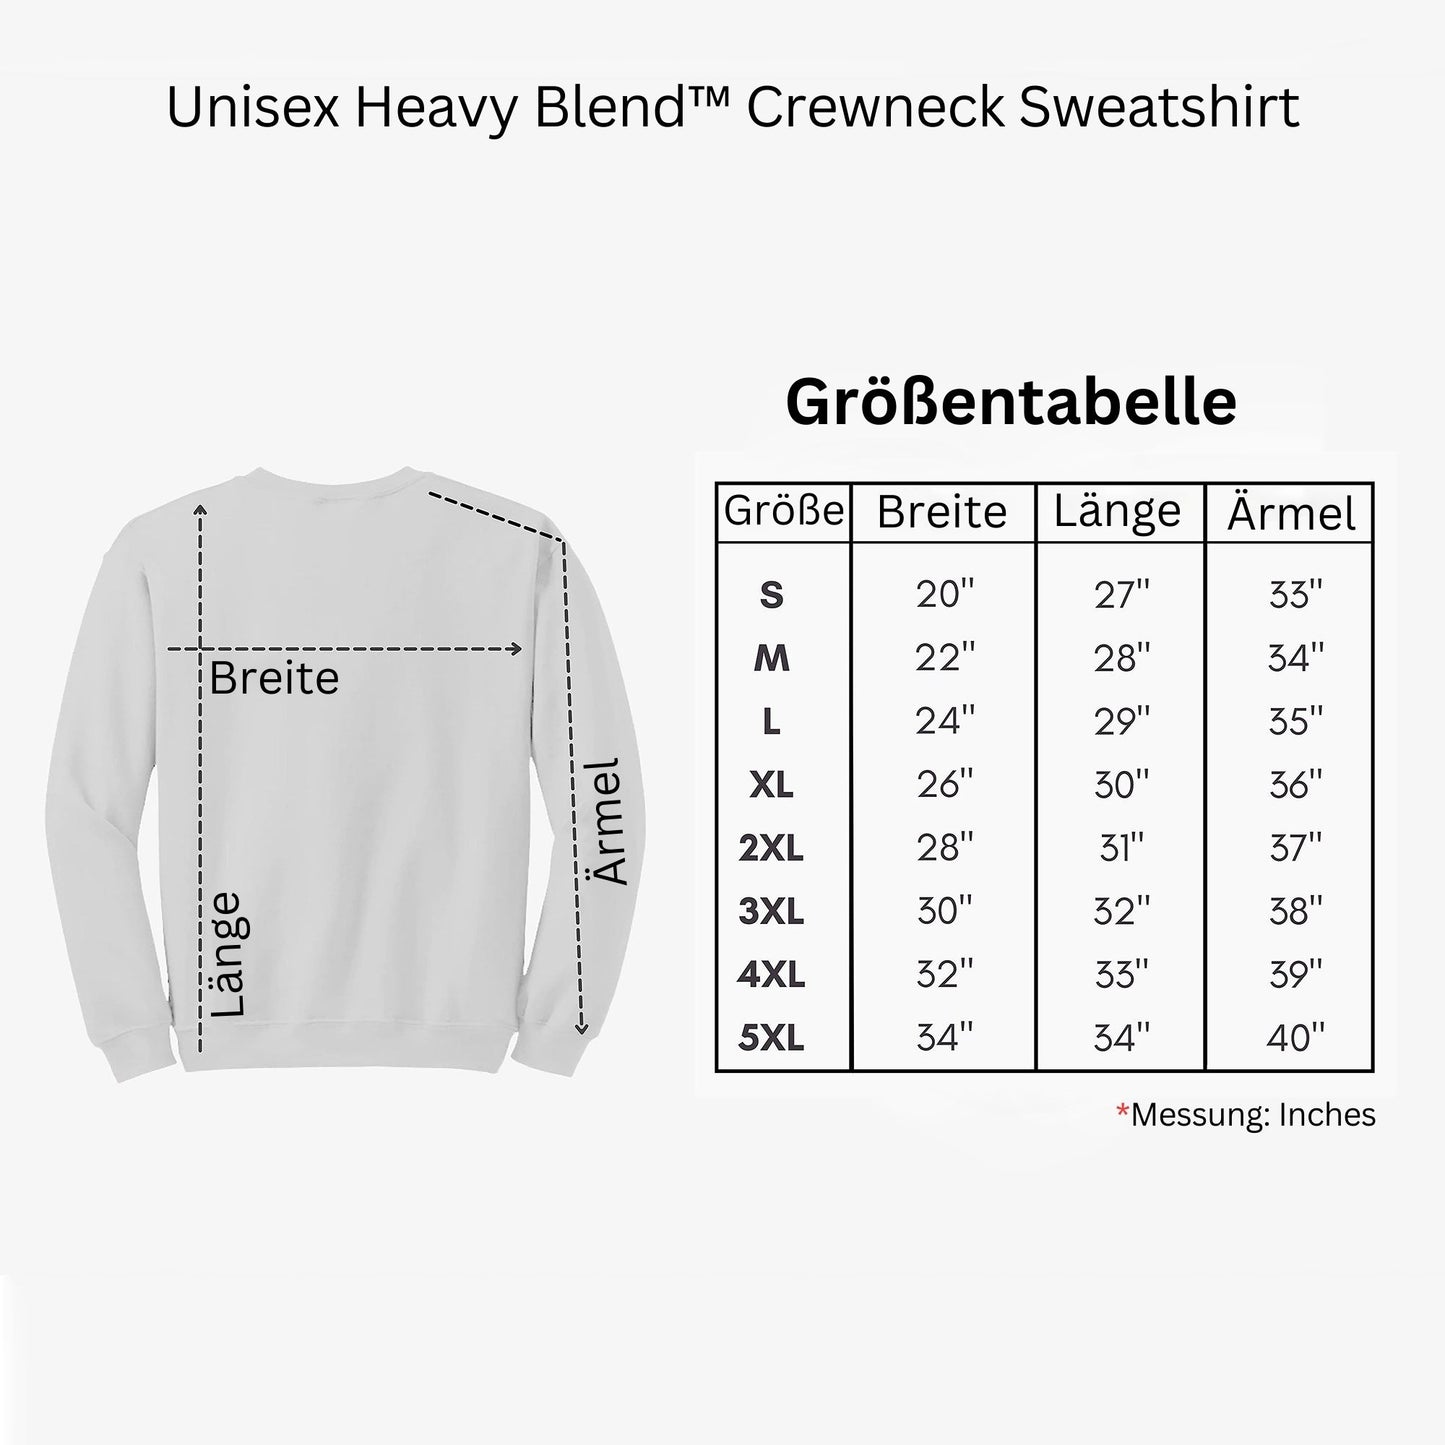 Custom 'Grandma EST' Sweatshirt with Grandchildren's Names on Sleeves